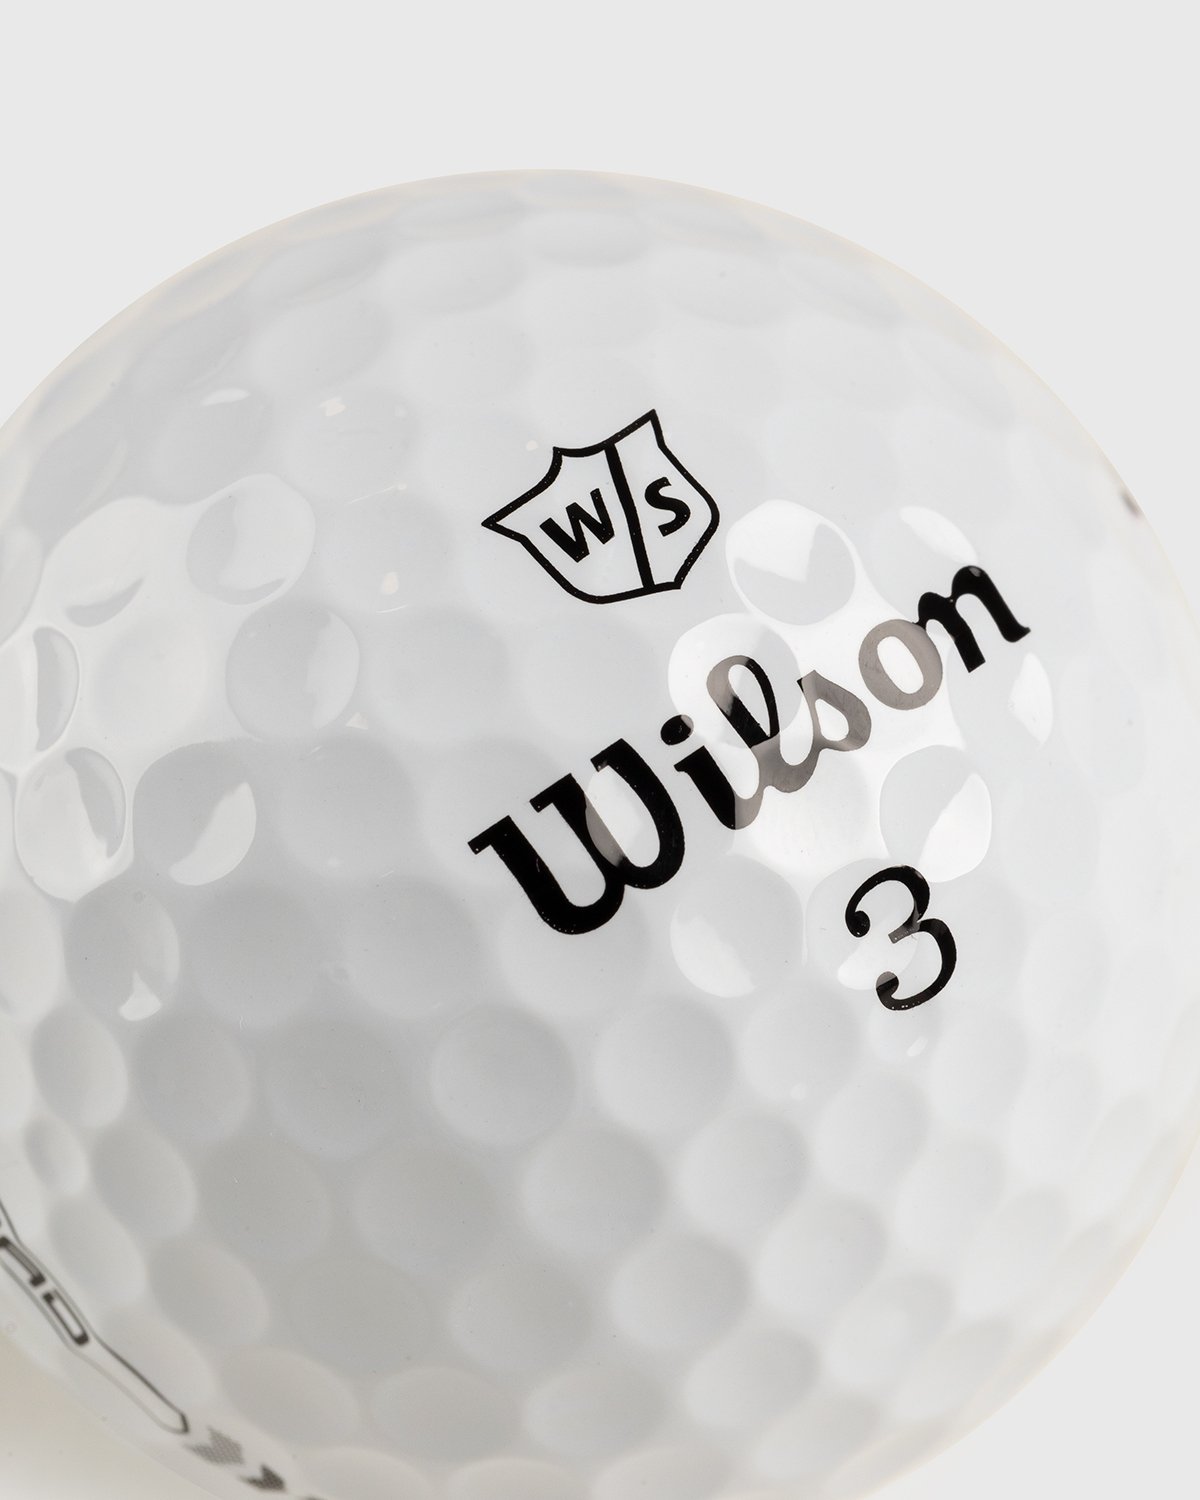 Wilson x Highsnobiety - HS Sports 12 Golf Balls - Lifestyle - White - Image 4